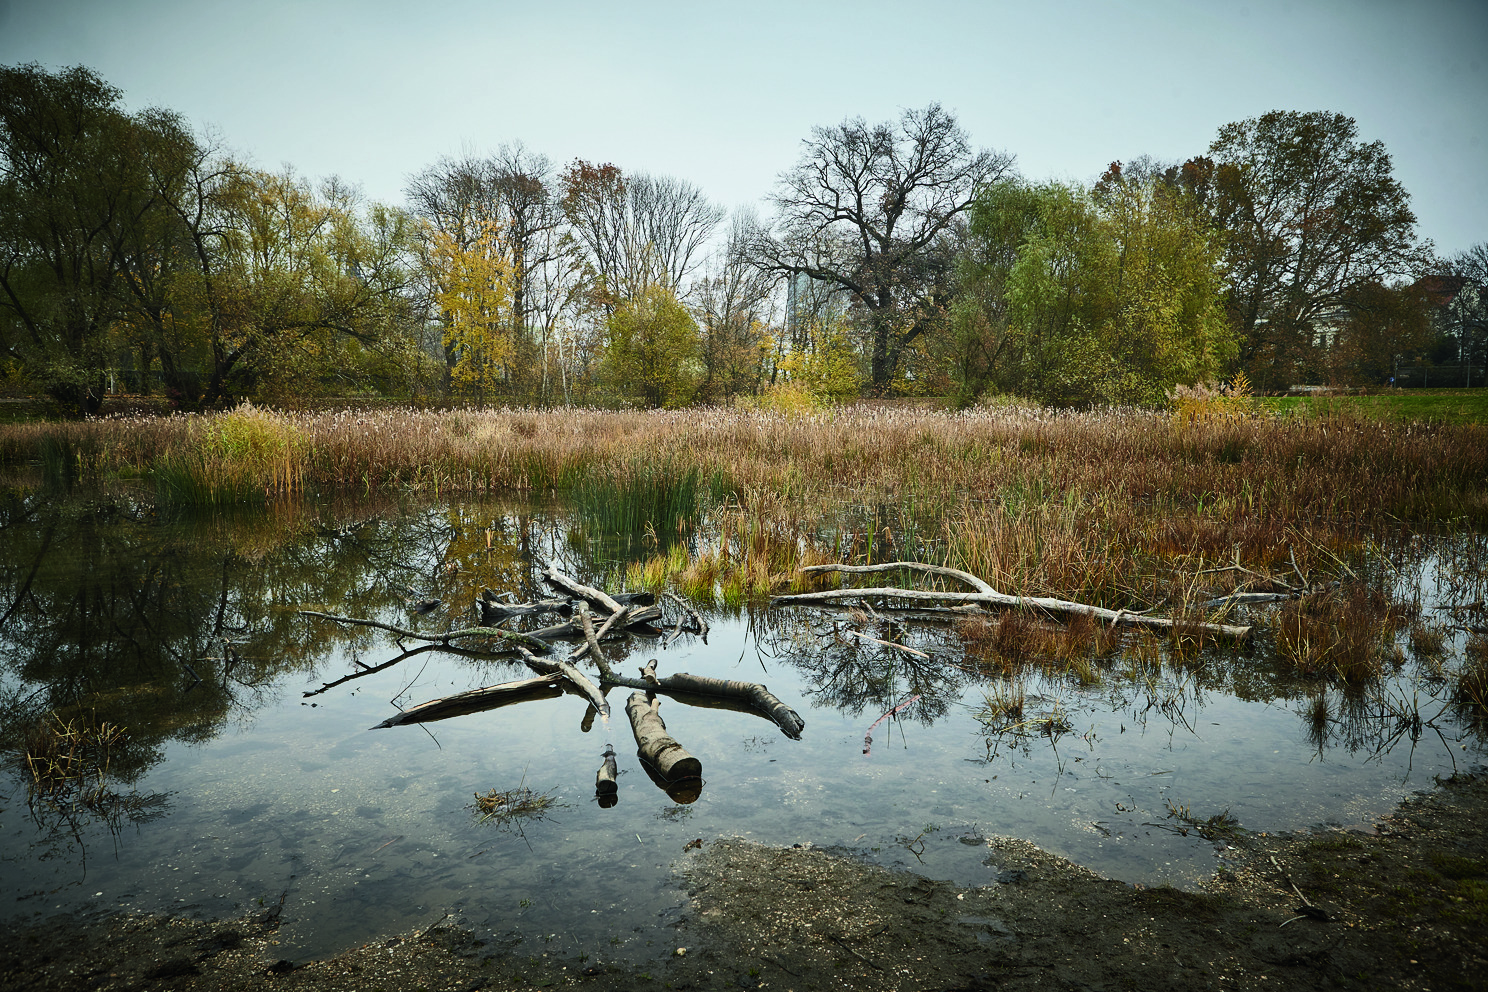   Die Pfütze im Rosental | Teich im Rosental trocknet aus  